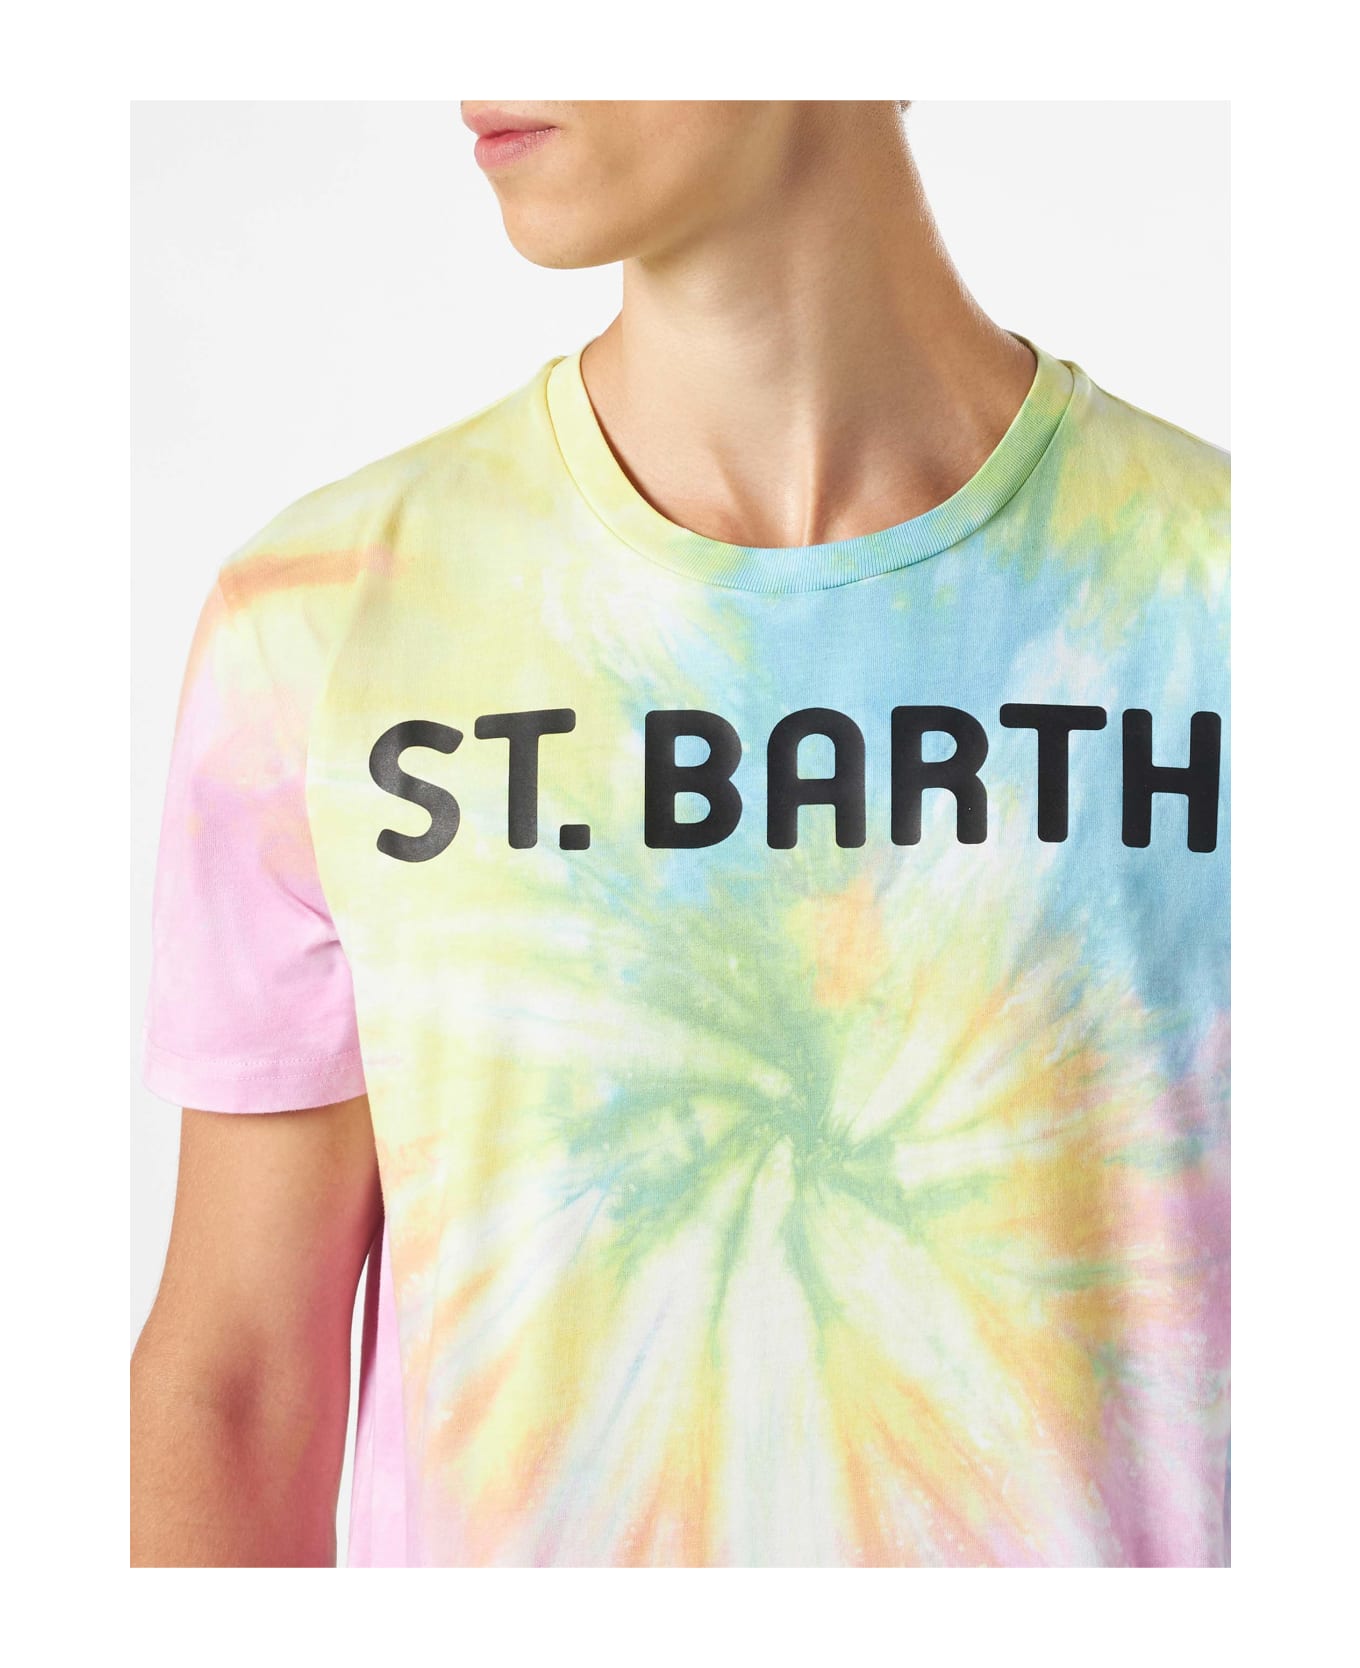 MC2 Saint Barth St. Barth Tie Dye Fluo Man T-shirt - MULTICOLOR